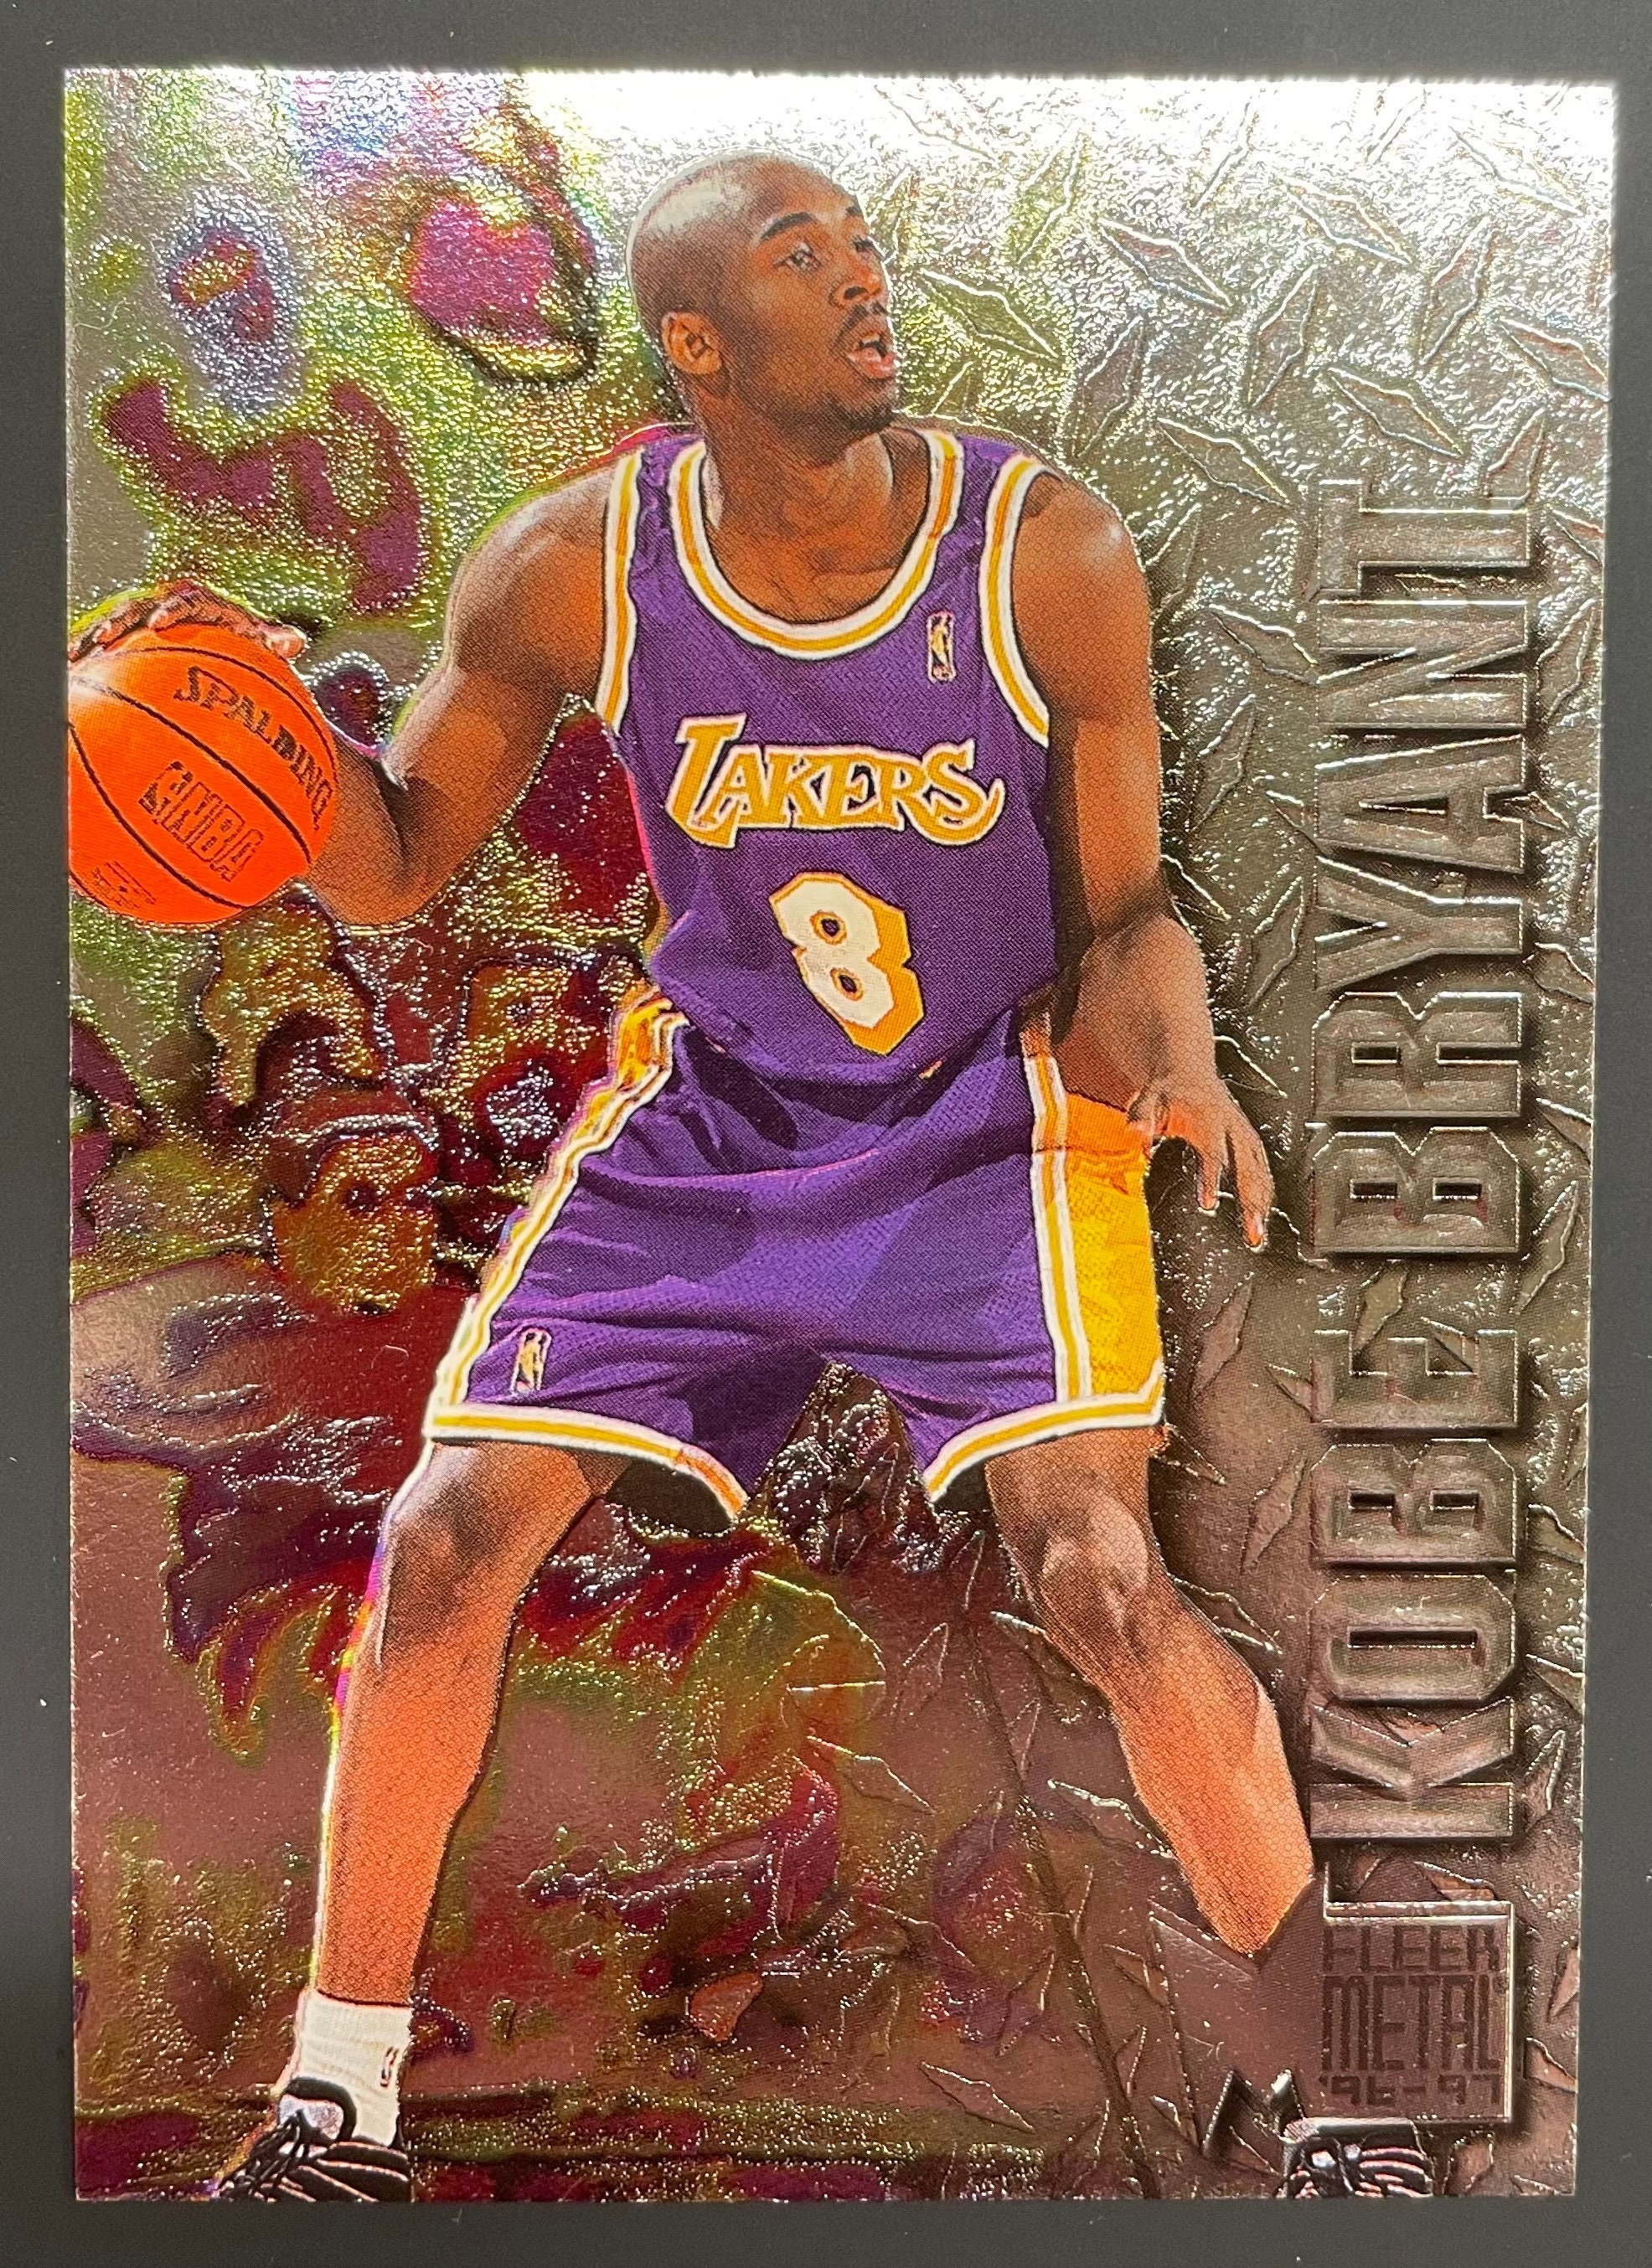 Authentic Rare Vintage Reebok Kobe Bryant #8 Lakers Jersey Royal